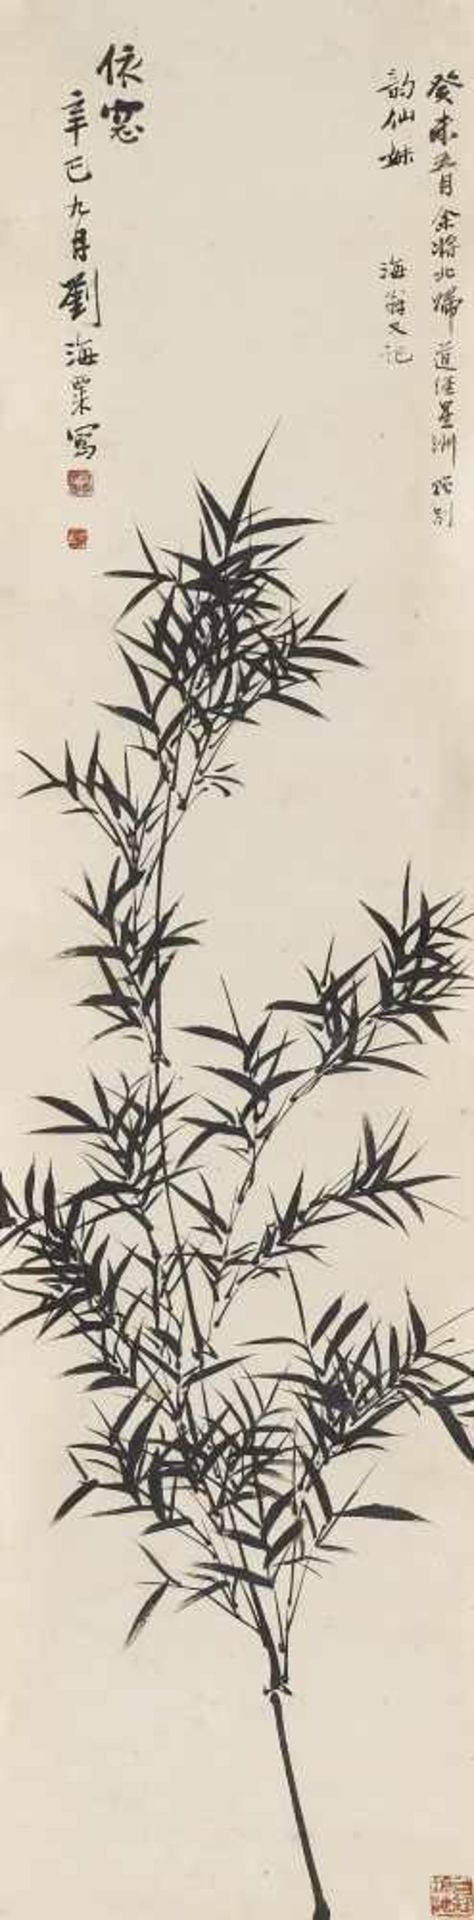 LIU, HAISU1896 Shangzhou - 1994. Bamboo. China. 1941 resp. 1943. Ink on paper. 136x33.5cm. .